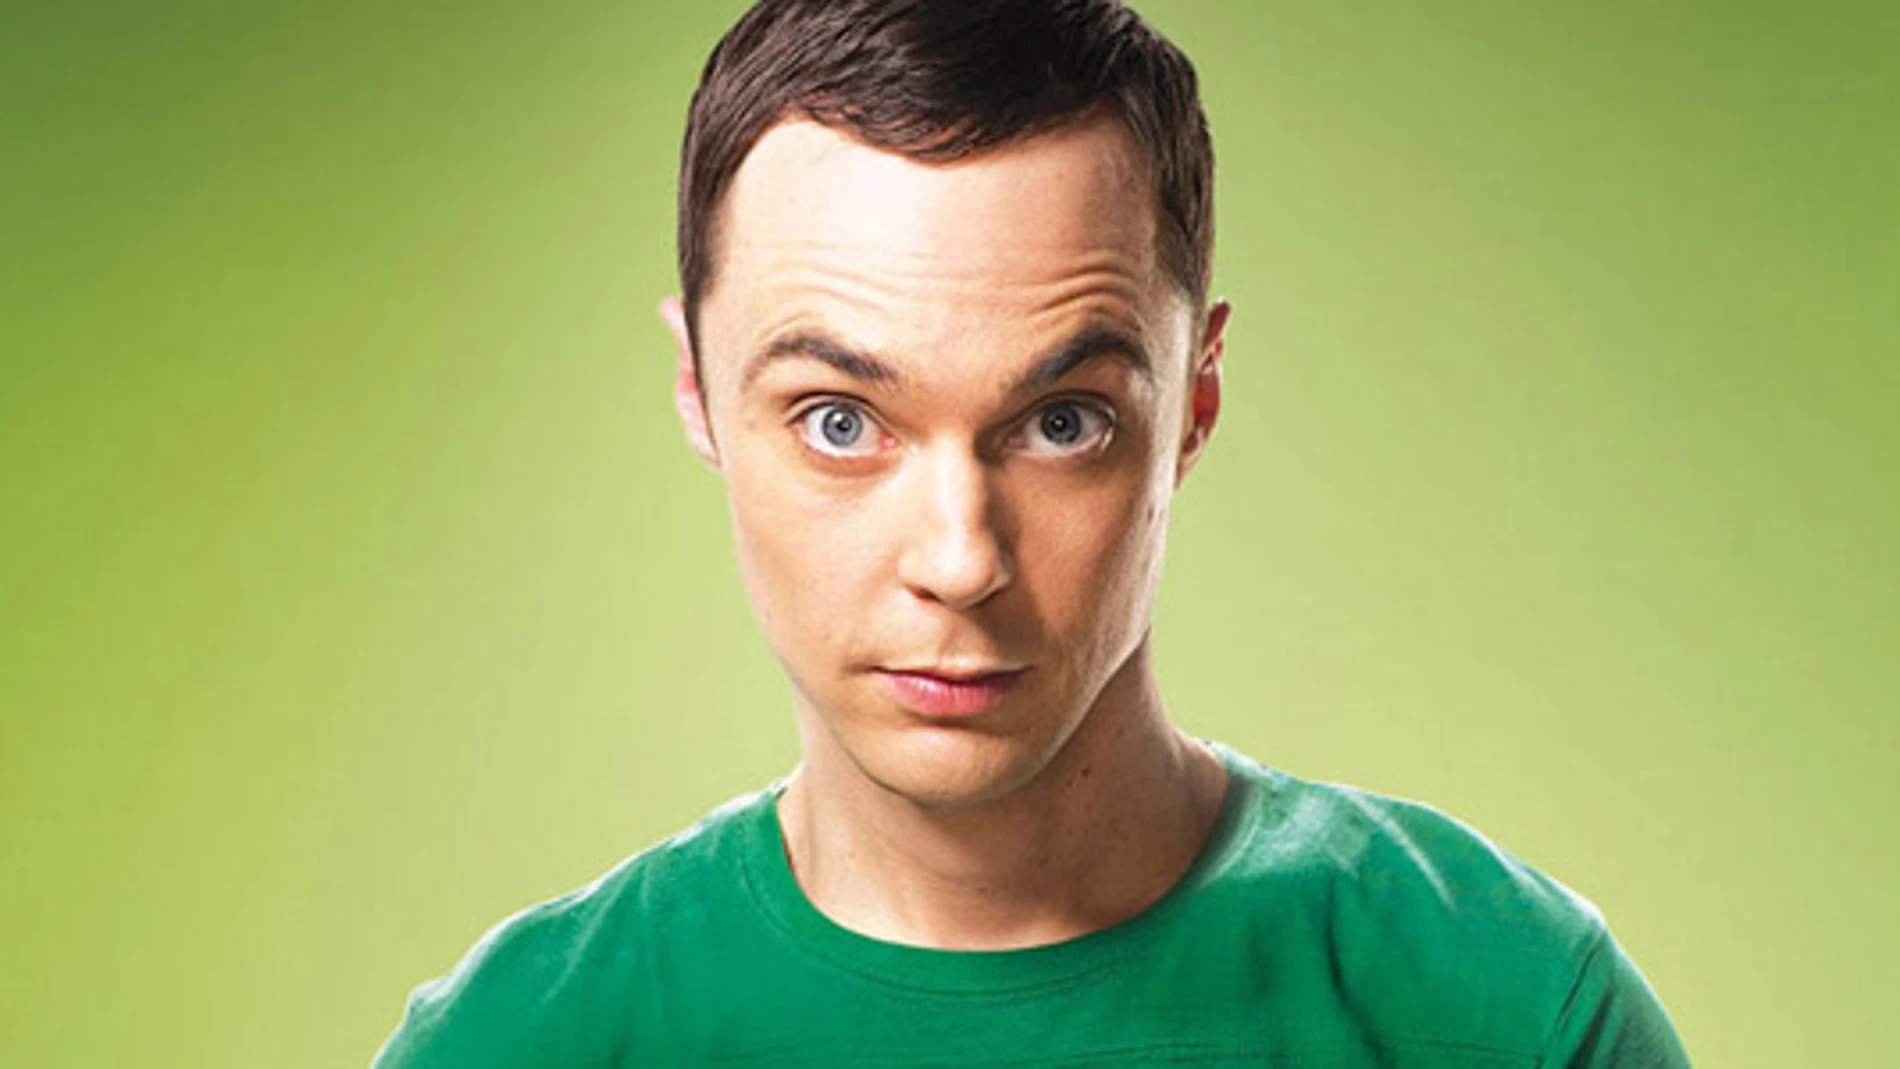 Sheldon Cooper (’The Big Bang Theory’) es un personaje de ficción con rasgos de Asperger